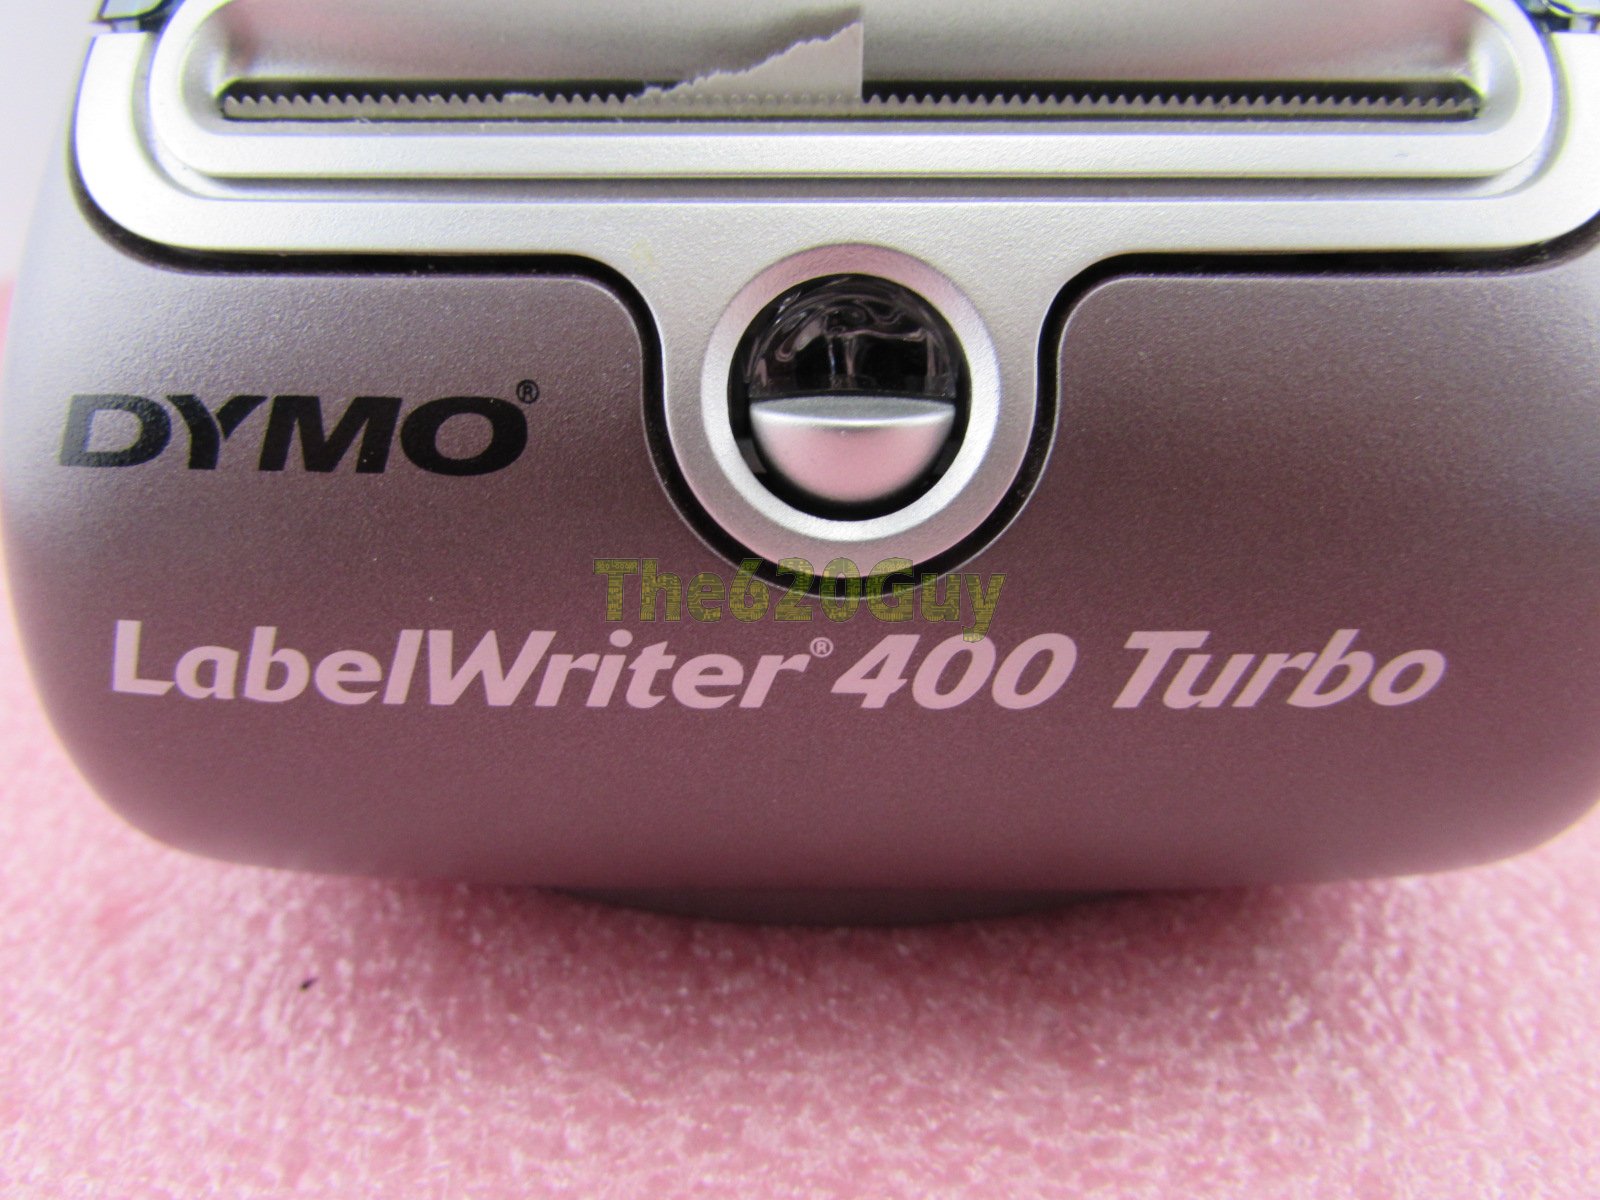 dymo 400 turbo windows 10 driver